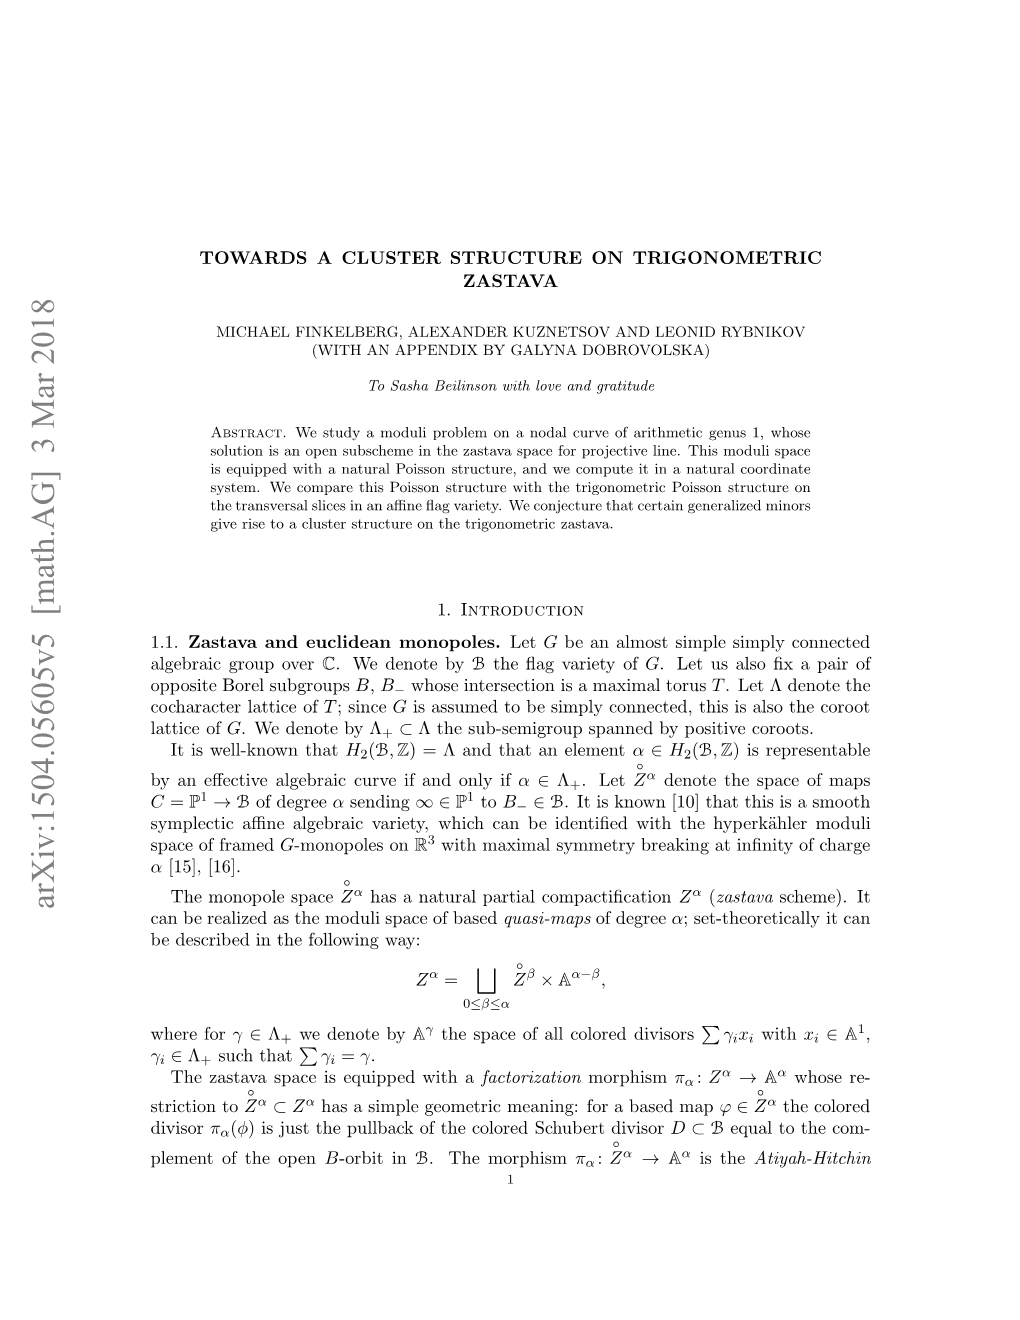 Towards a Cluster Structure on Trigonometric Zastava